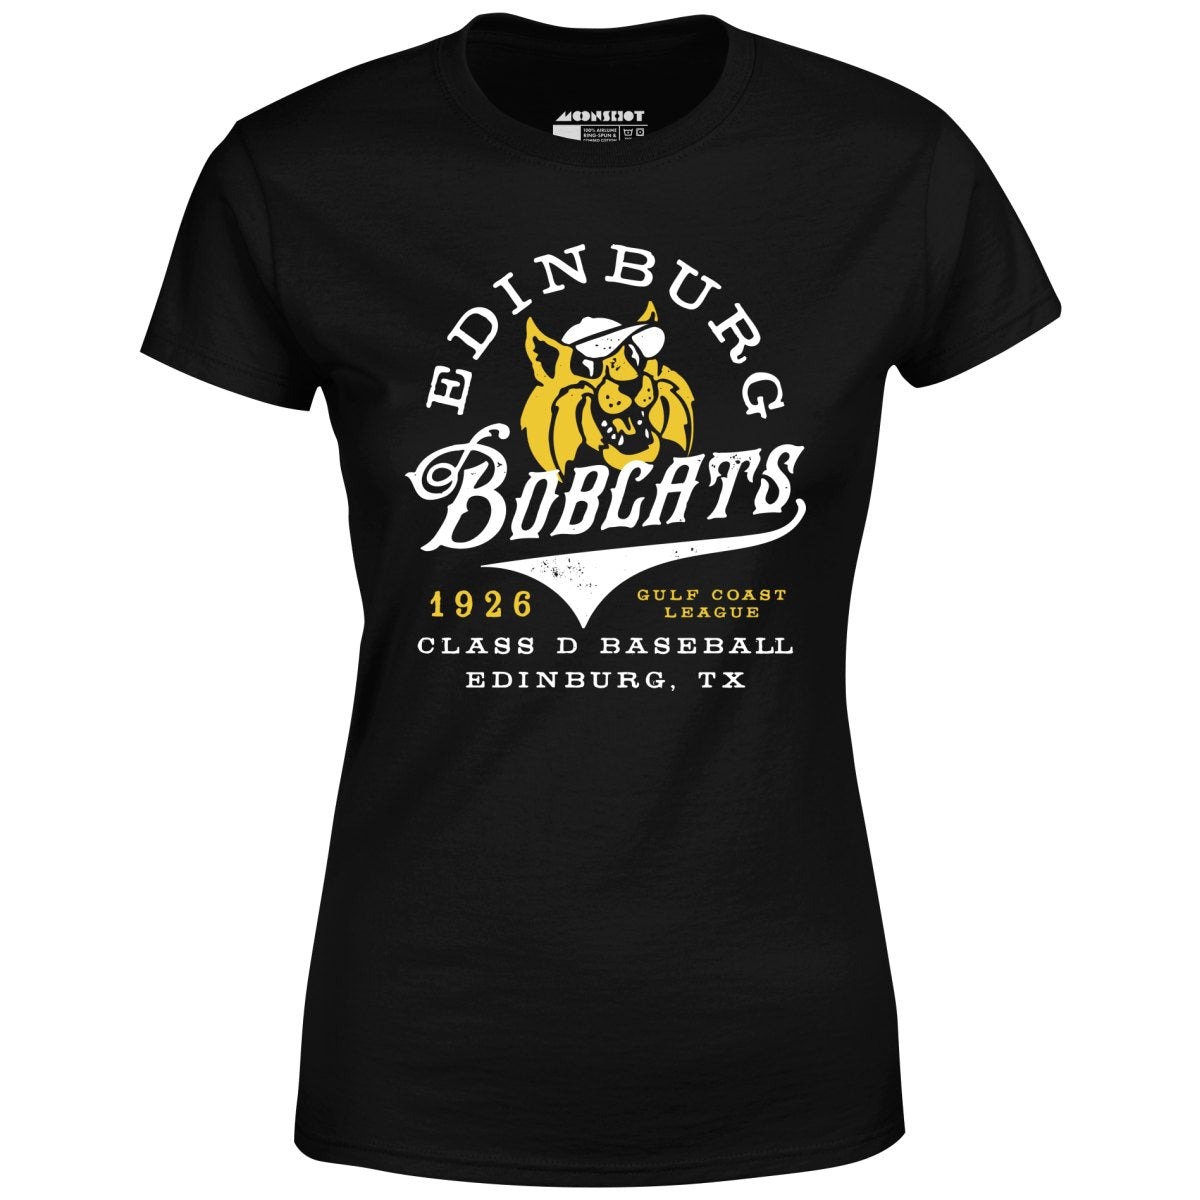 Edinburg Bobcats - Texas - Vintage Defunct Baseball Teams - Women's T-Shirt